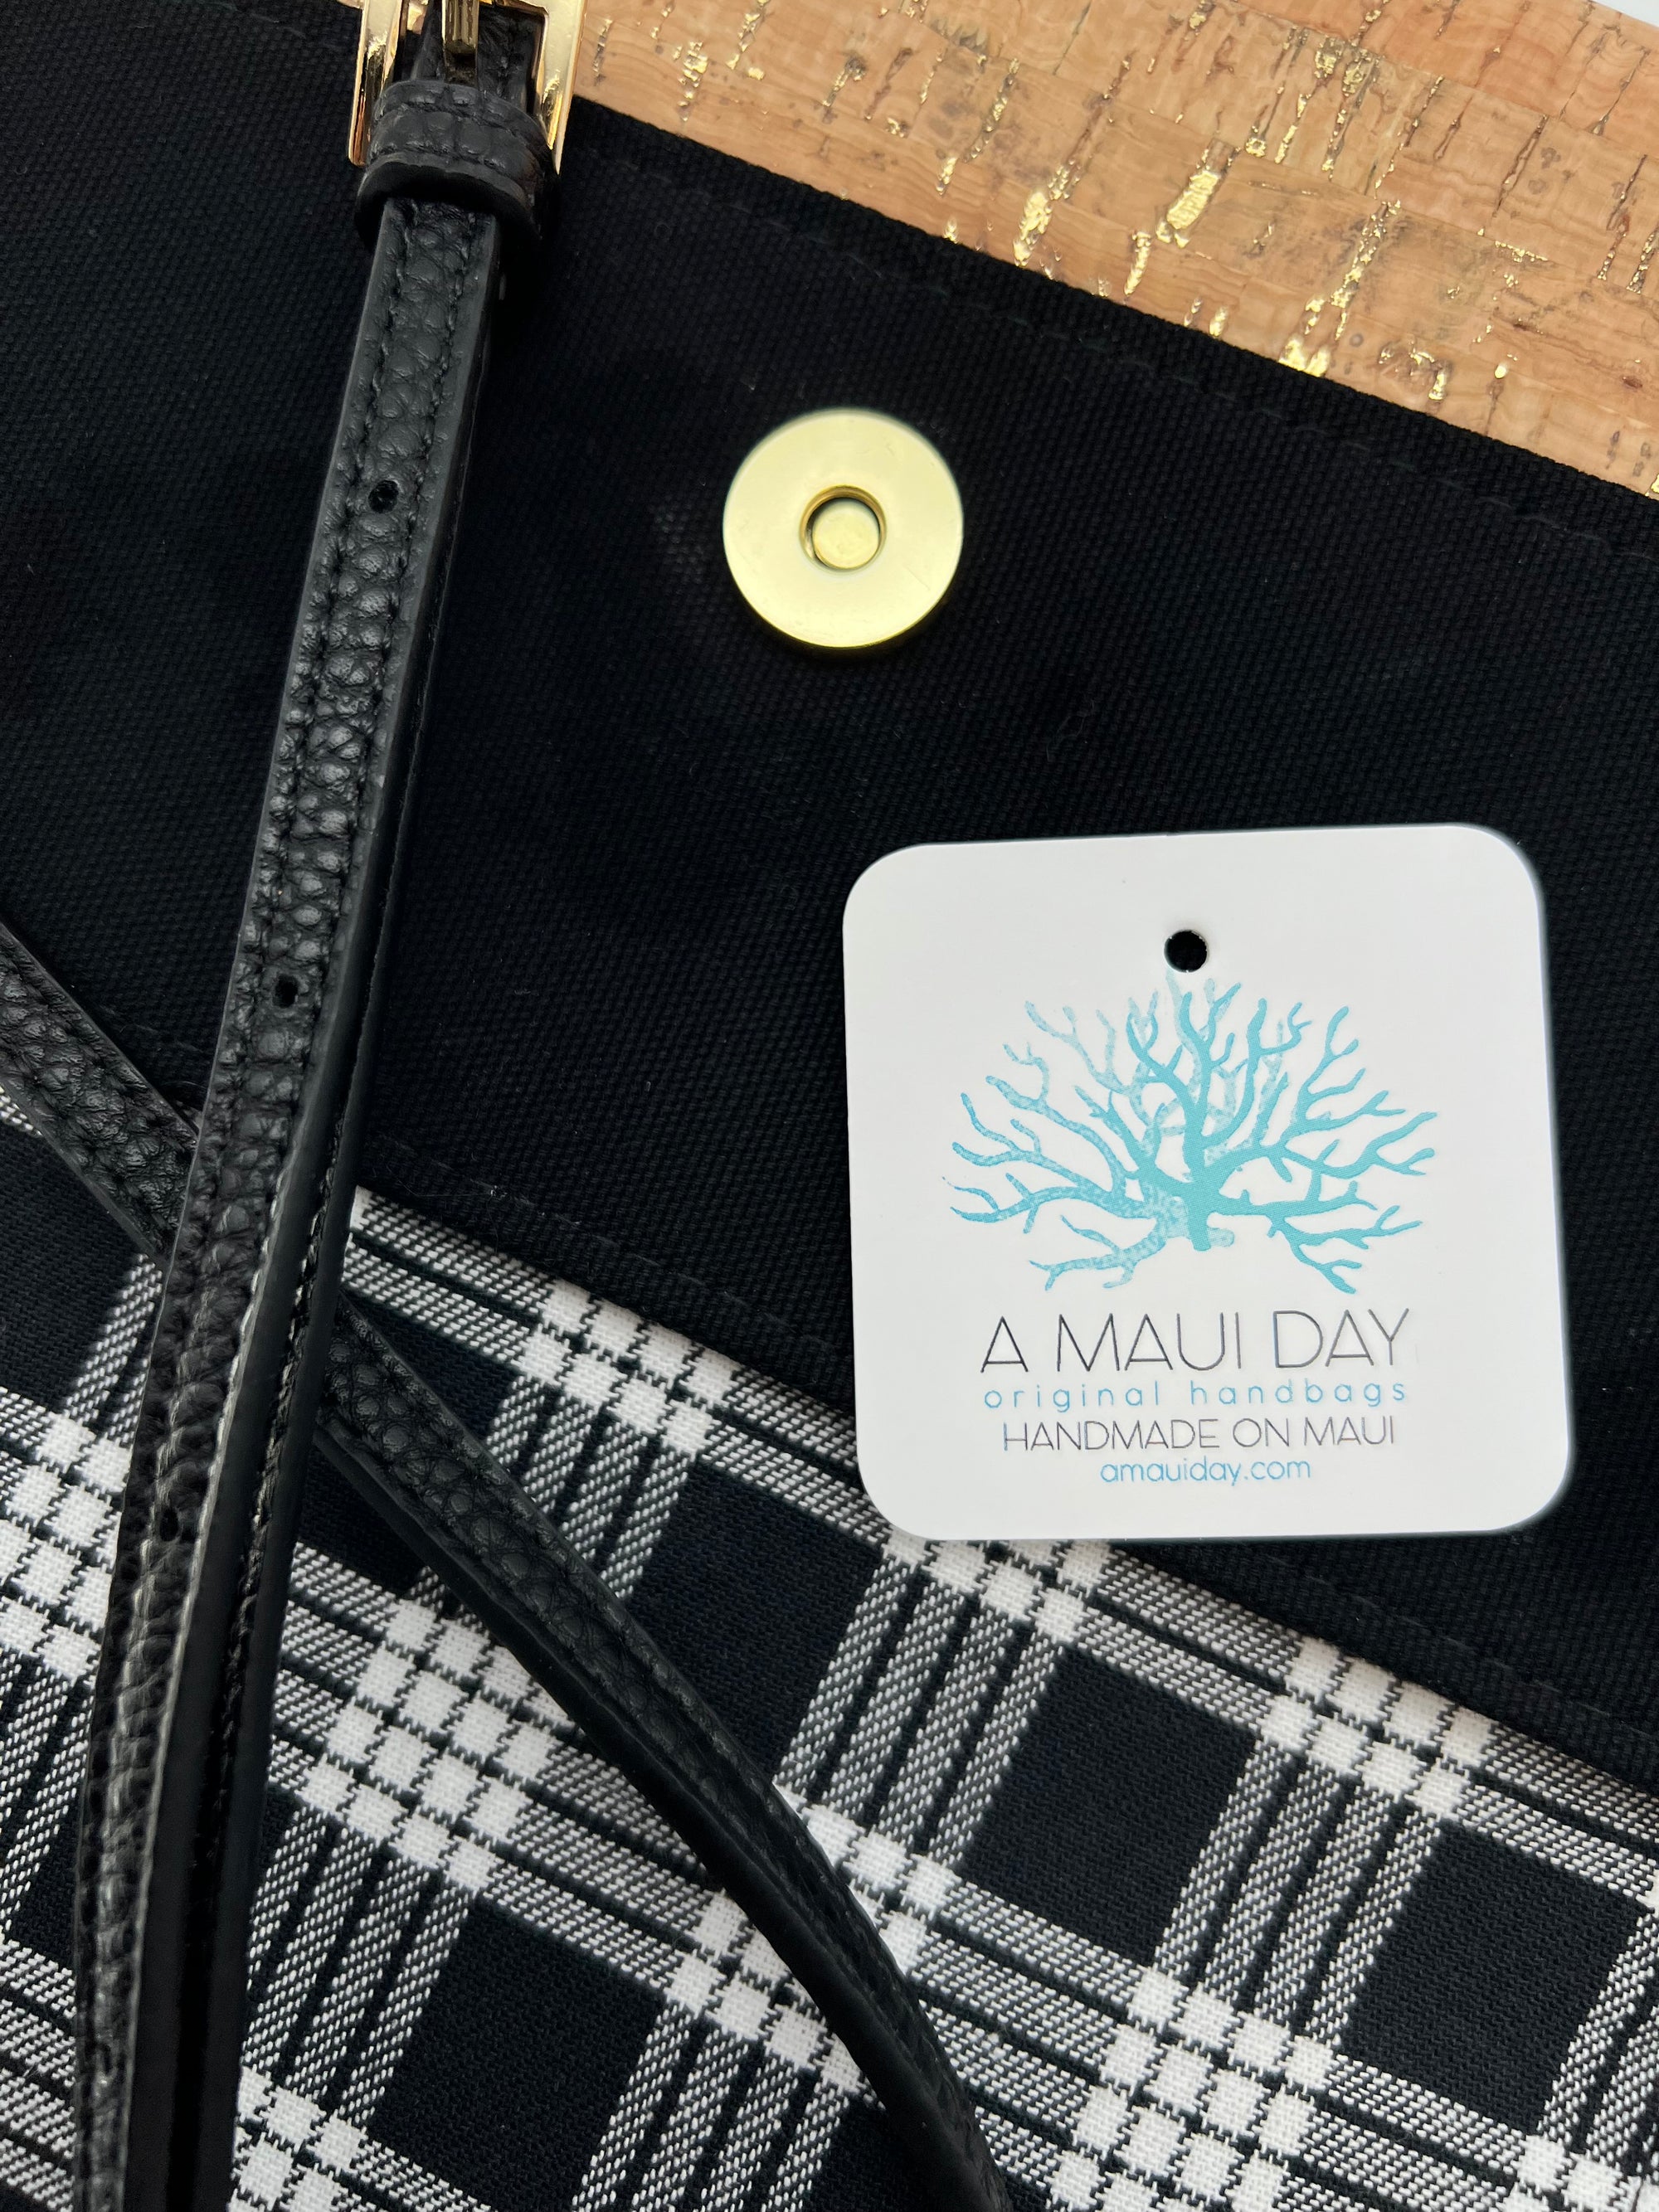 Pop-Up Mākeke - A Maui Day Original Handbags - Handprinted Fold-Over Handbag - Gold Quilt on Black Canvas - Inside